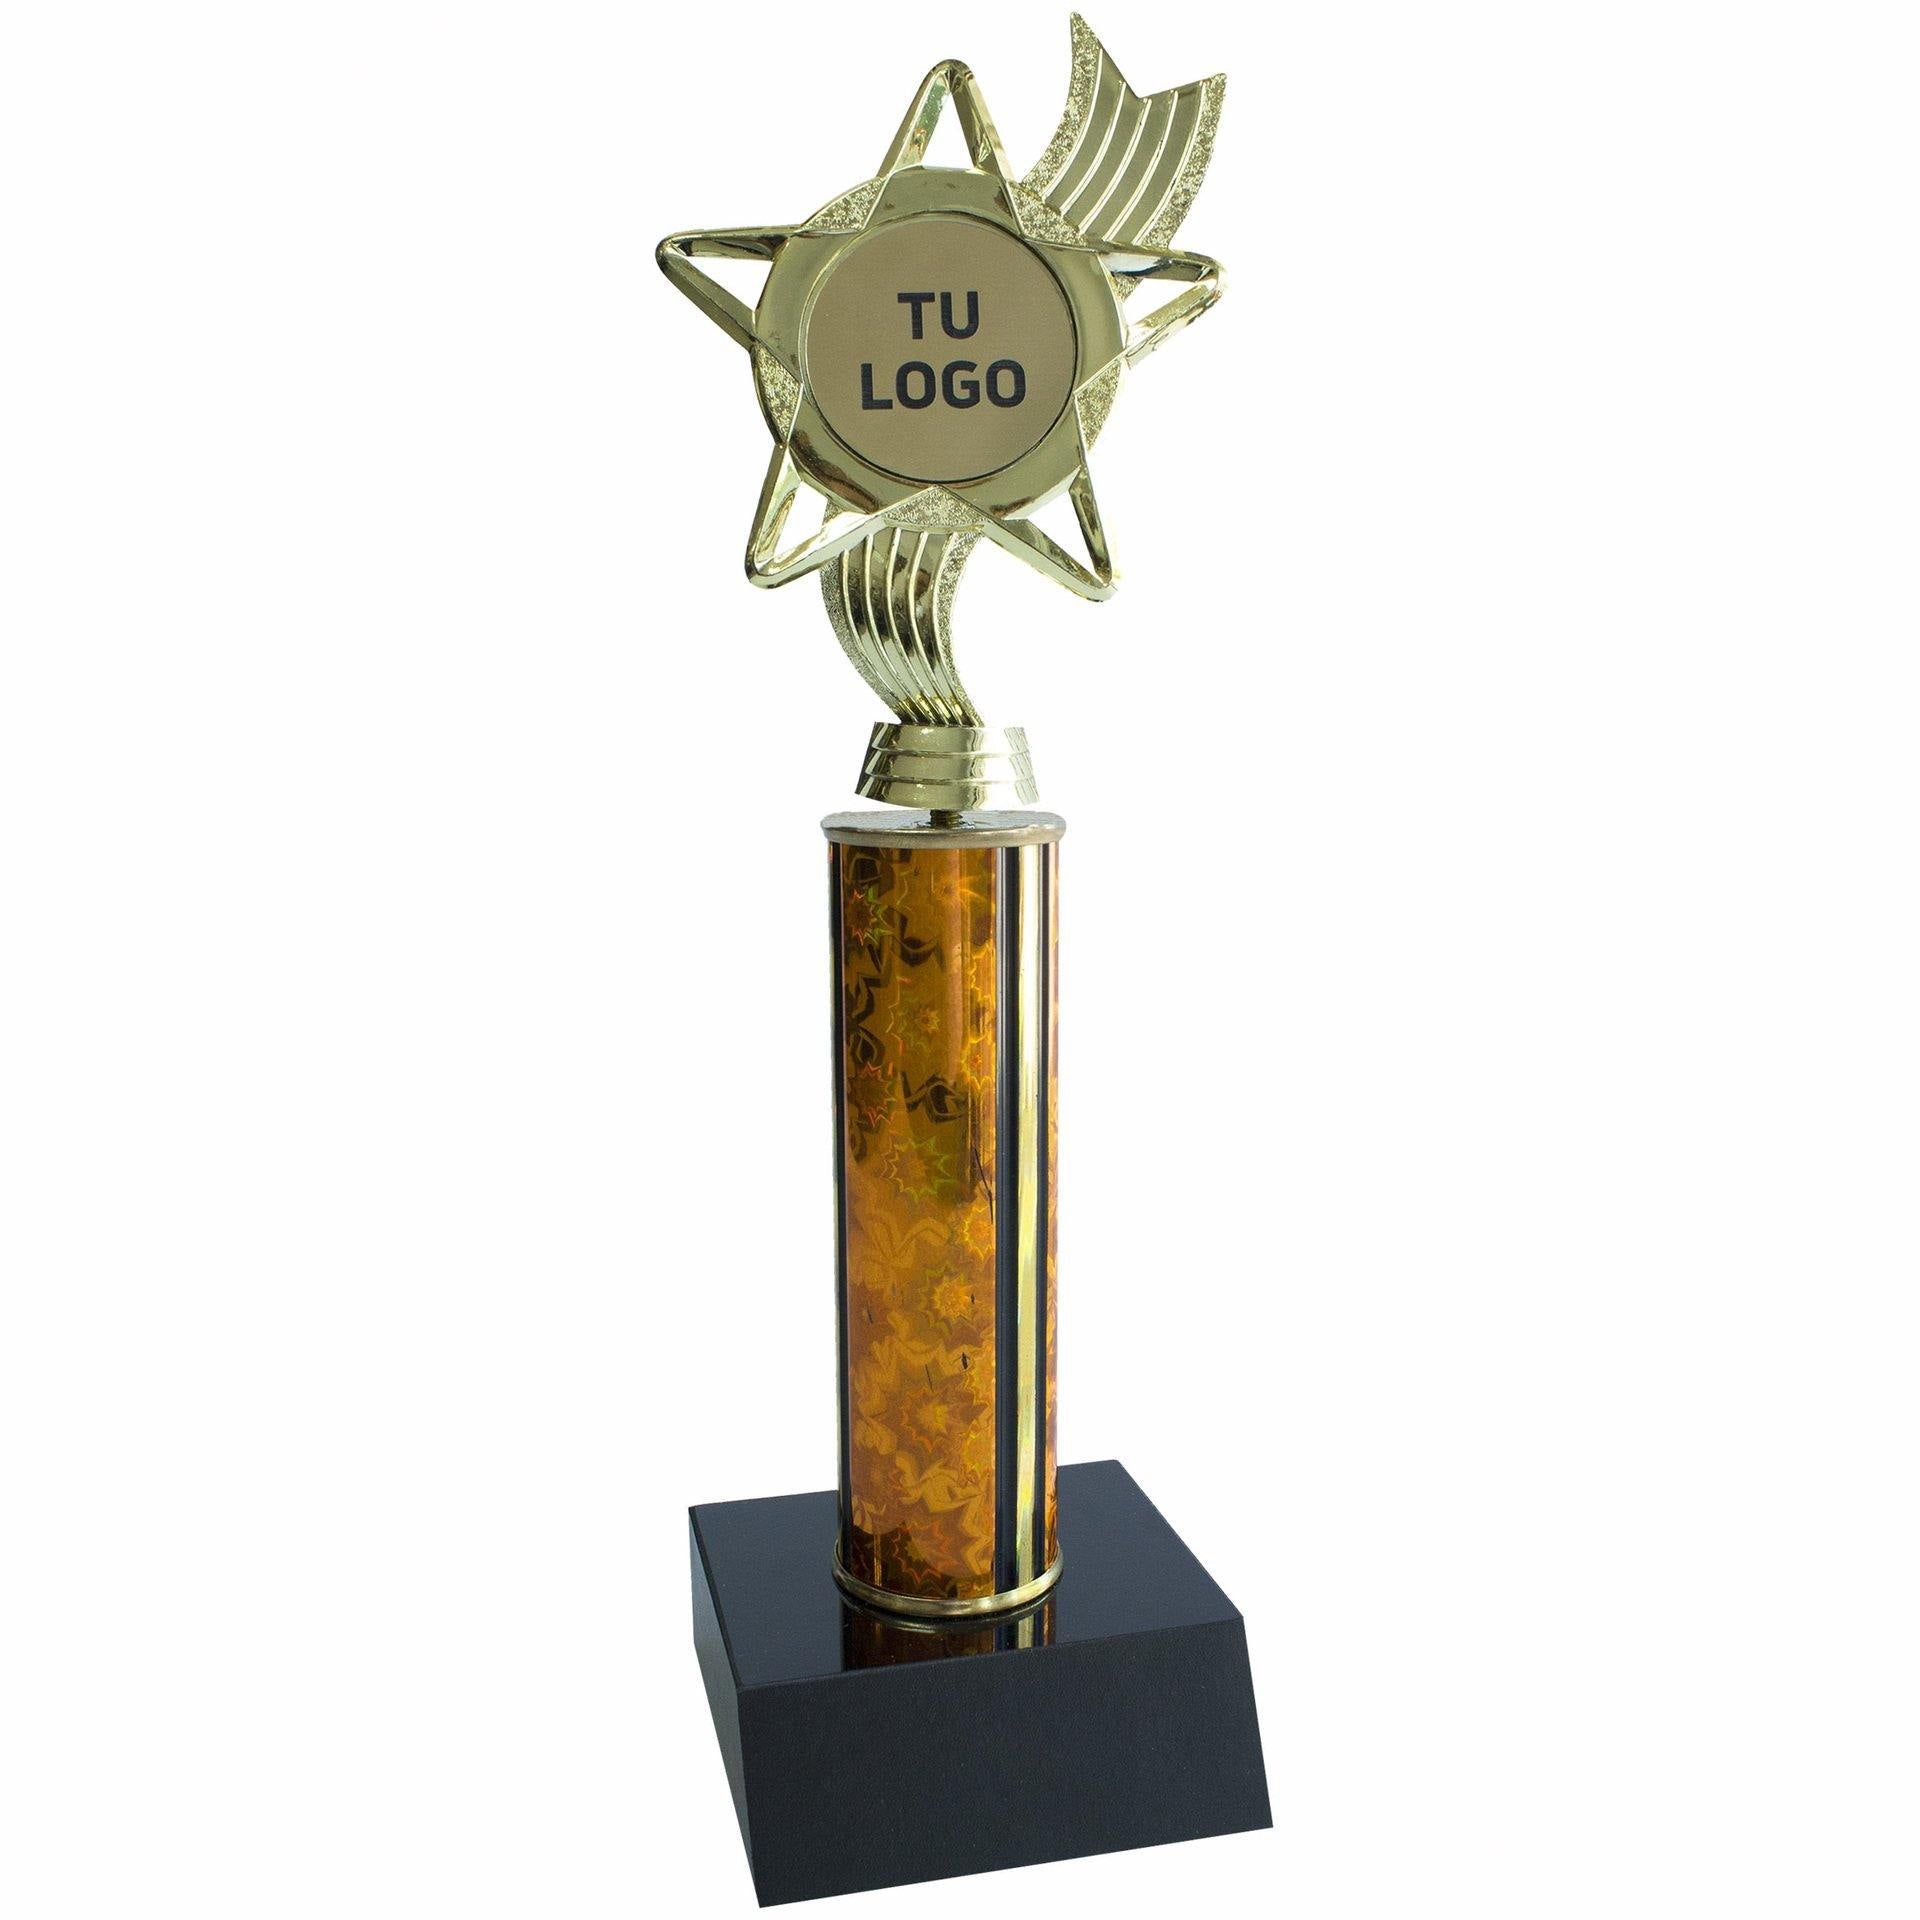 PDV100. Trofeos Portadistintivos - Capitán Trofeo